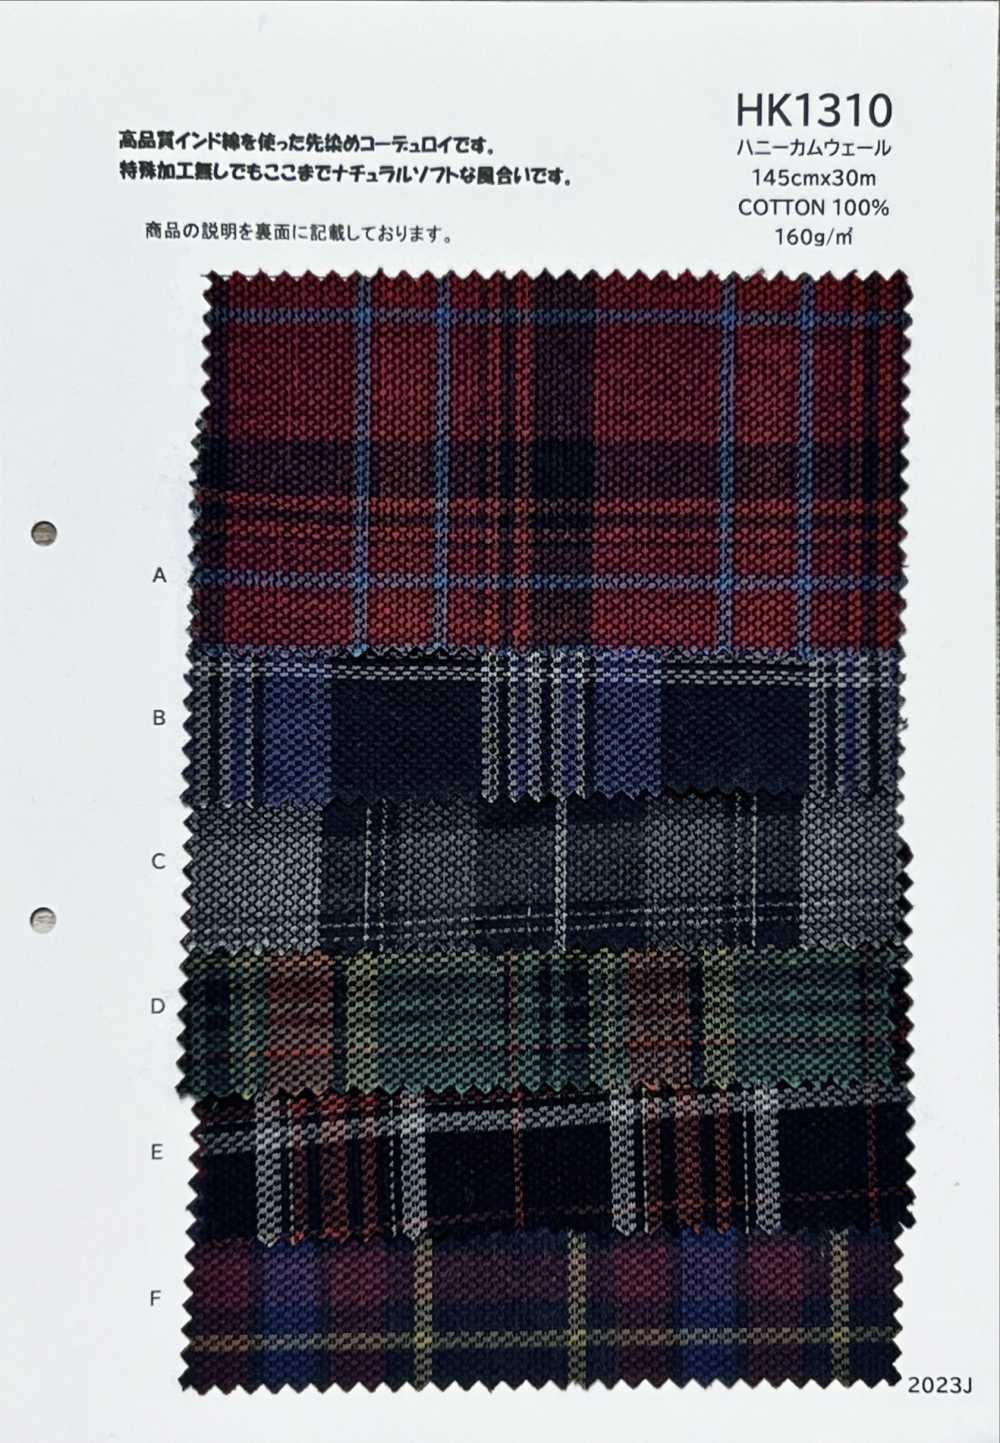 HK1310 Panal De Gales[Fabrica Textil] KOYAMA